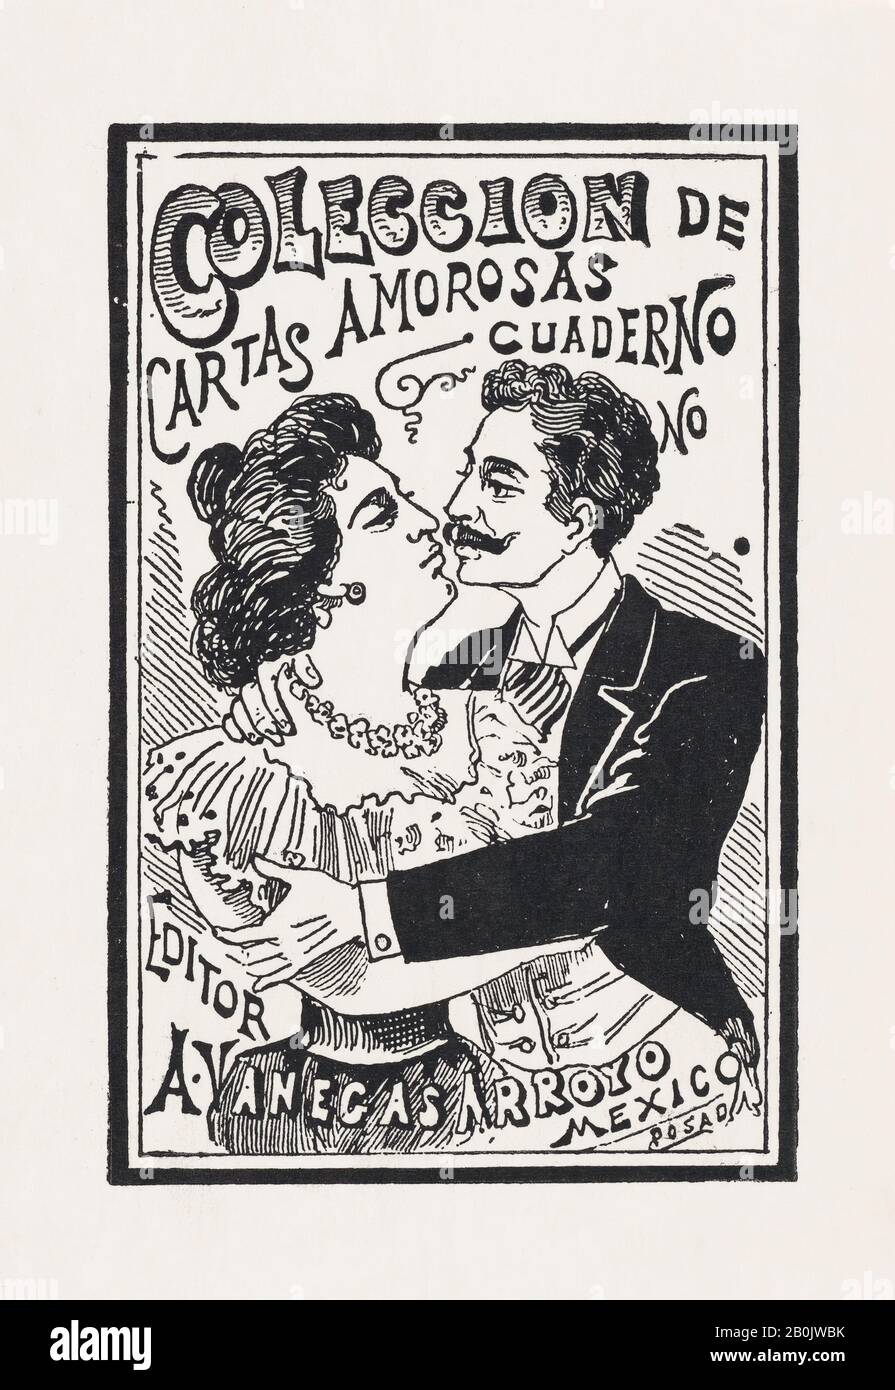 José Guadalupe Posada, A couple in a passionate embrace, illustration for 'Coleccion de Cartas Amorosas,' edited by Antonio Vanegas Arroyo, José Guadalupe Posada (Mexican, 1851–1913), ca. 1880–1910, Wood engraving, Sheet: 6 3/4 × 4 13/16 in. (17.2 × 12.2 cm), Image: 5 7/16 × 3 9/16 in. (13.8 × 9 cm), Prints Stock Photo